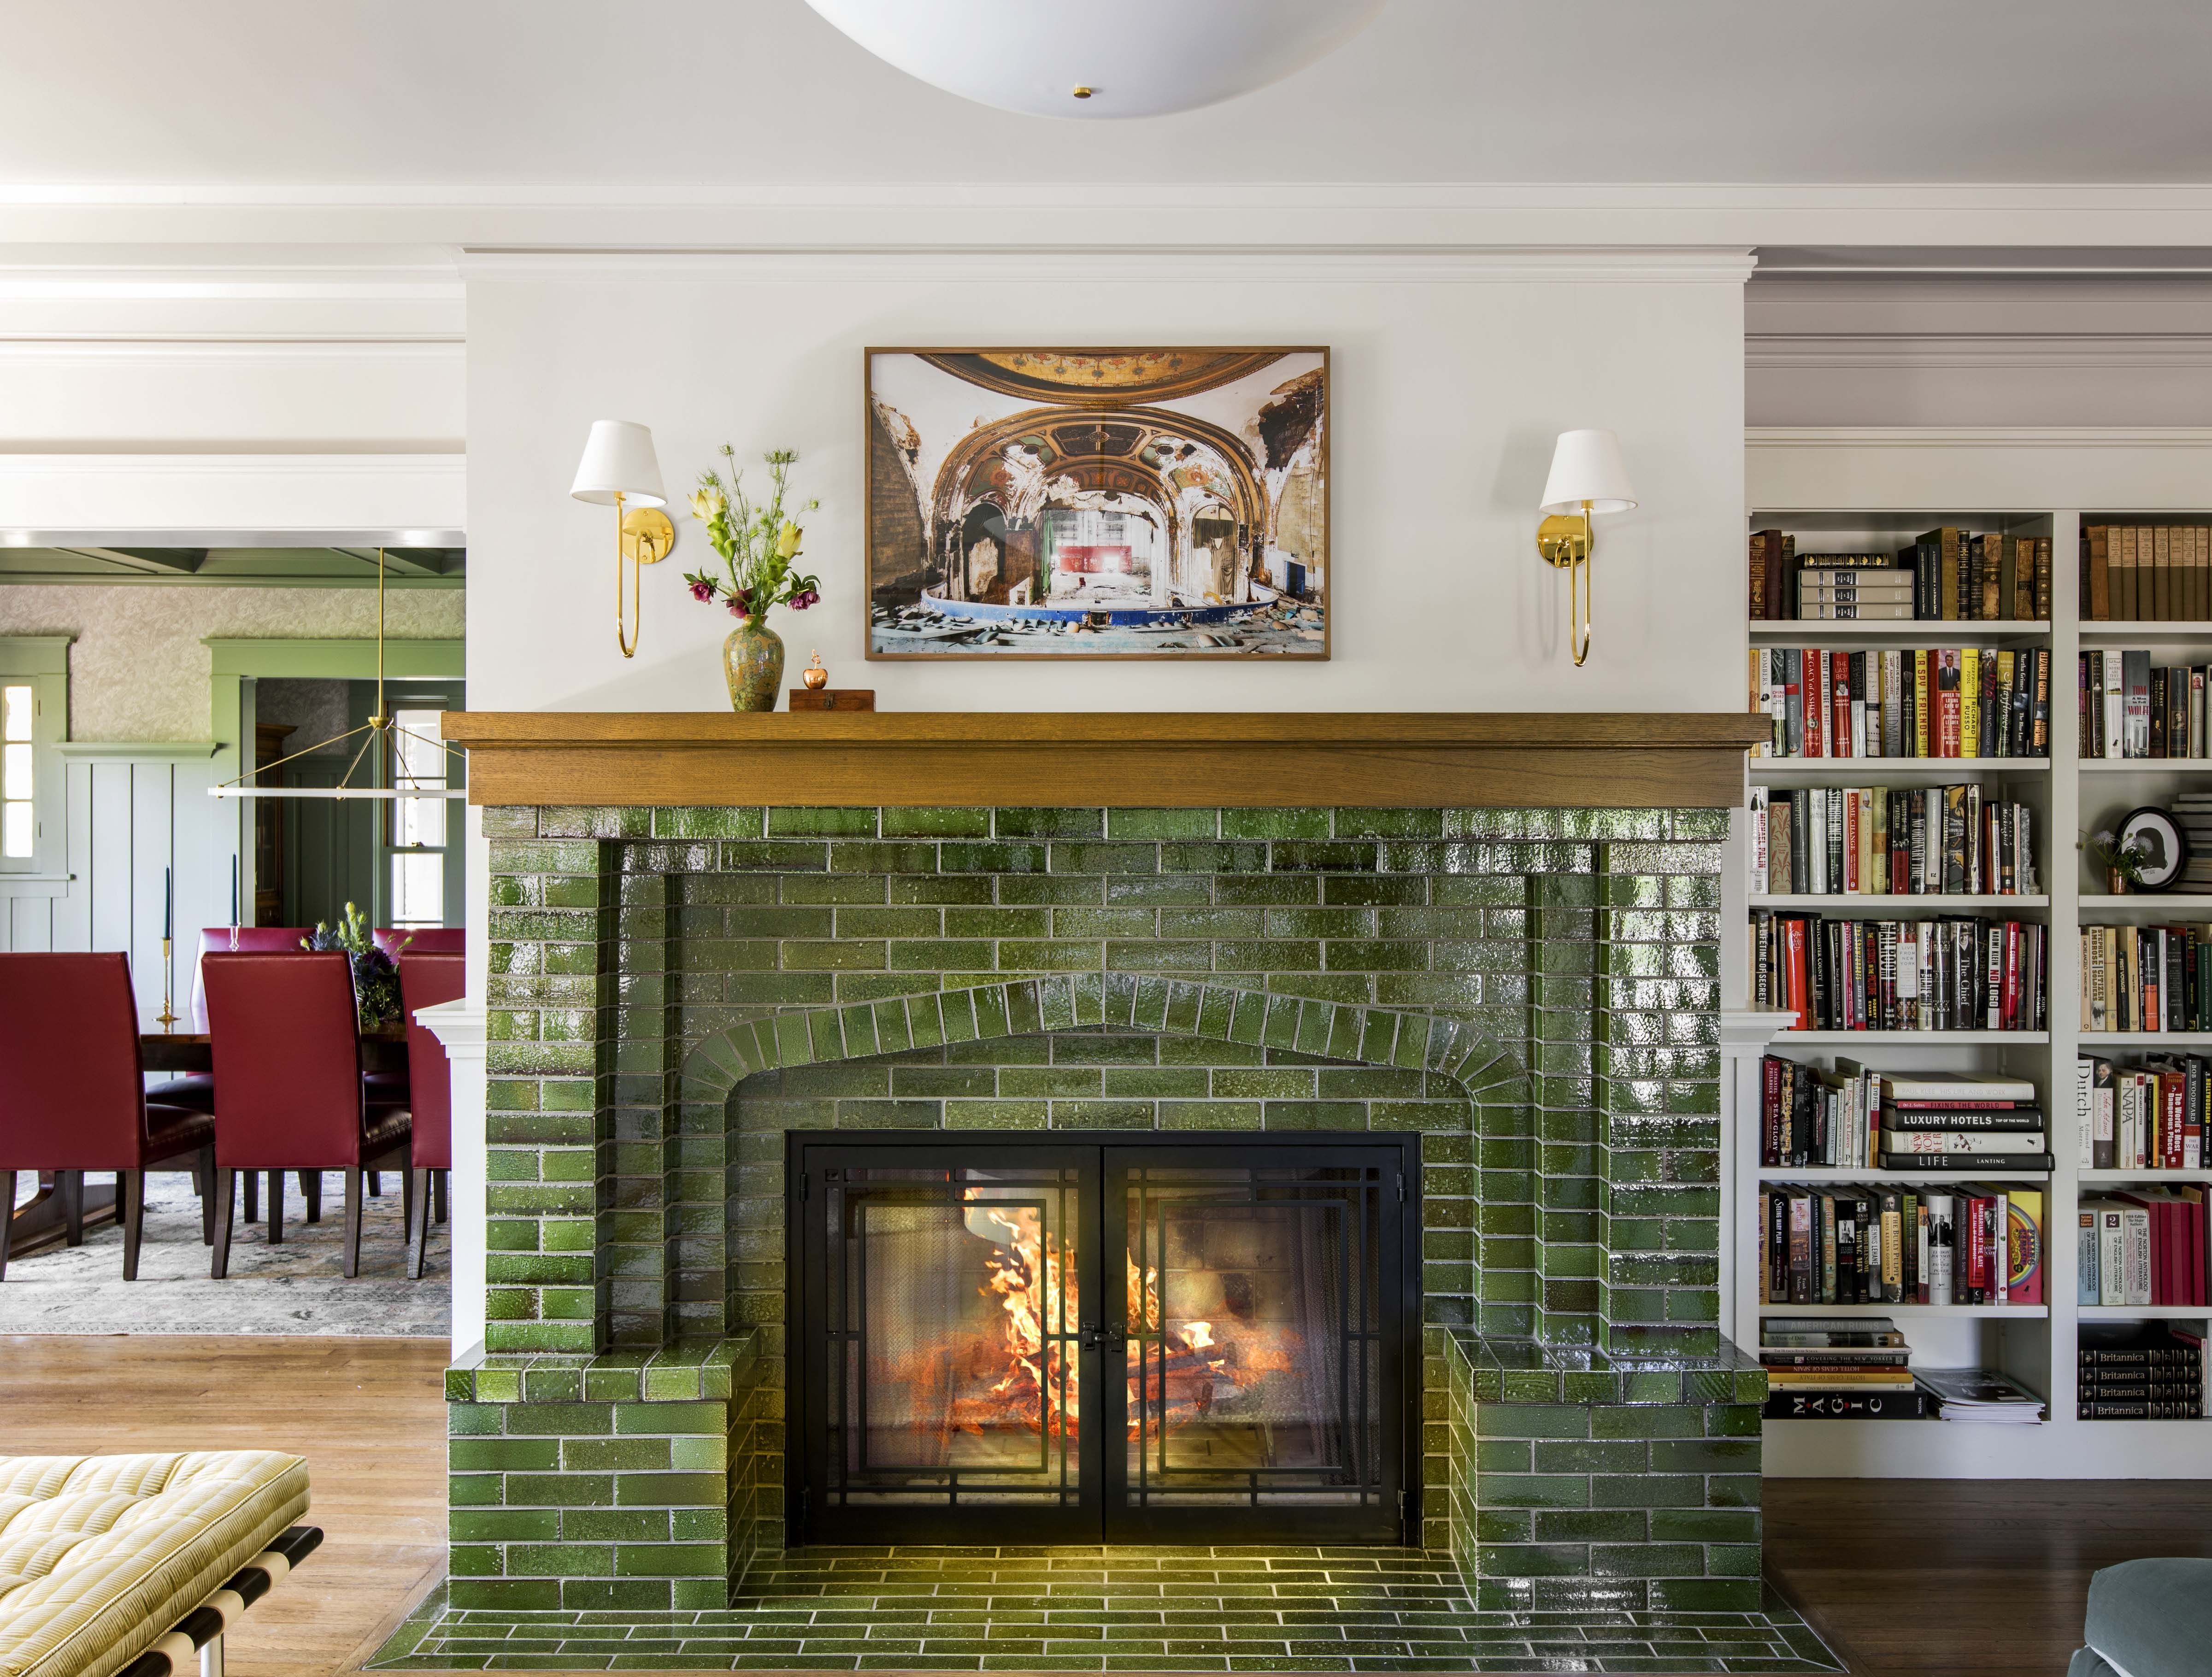 19 Amazing DIY Fireplace Mantel Ideas To Inspire You